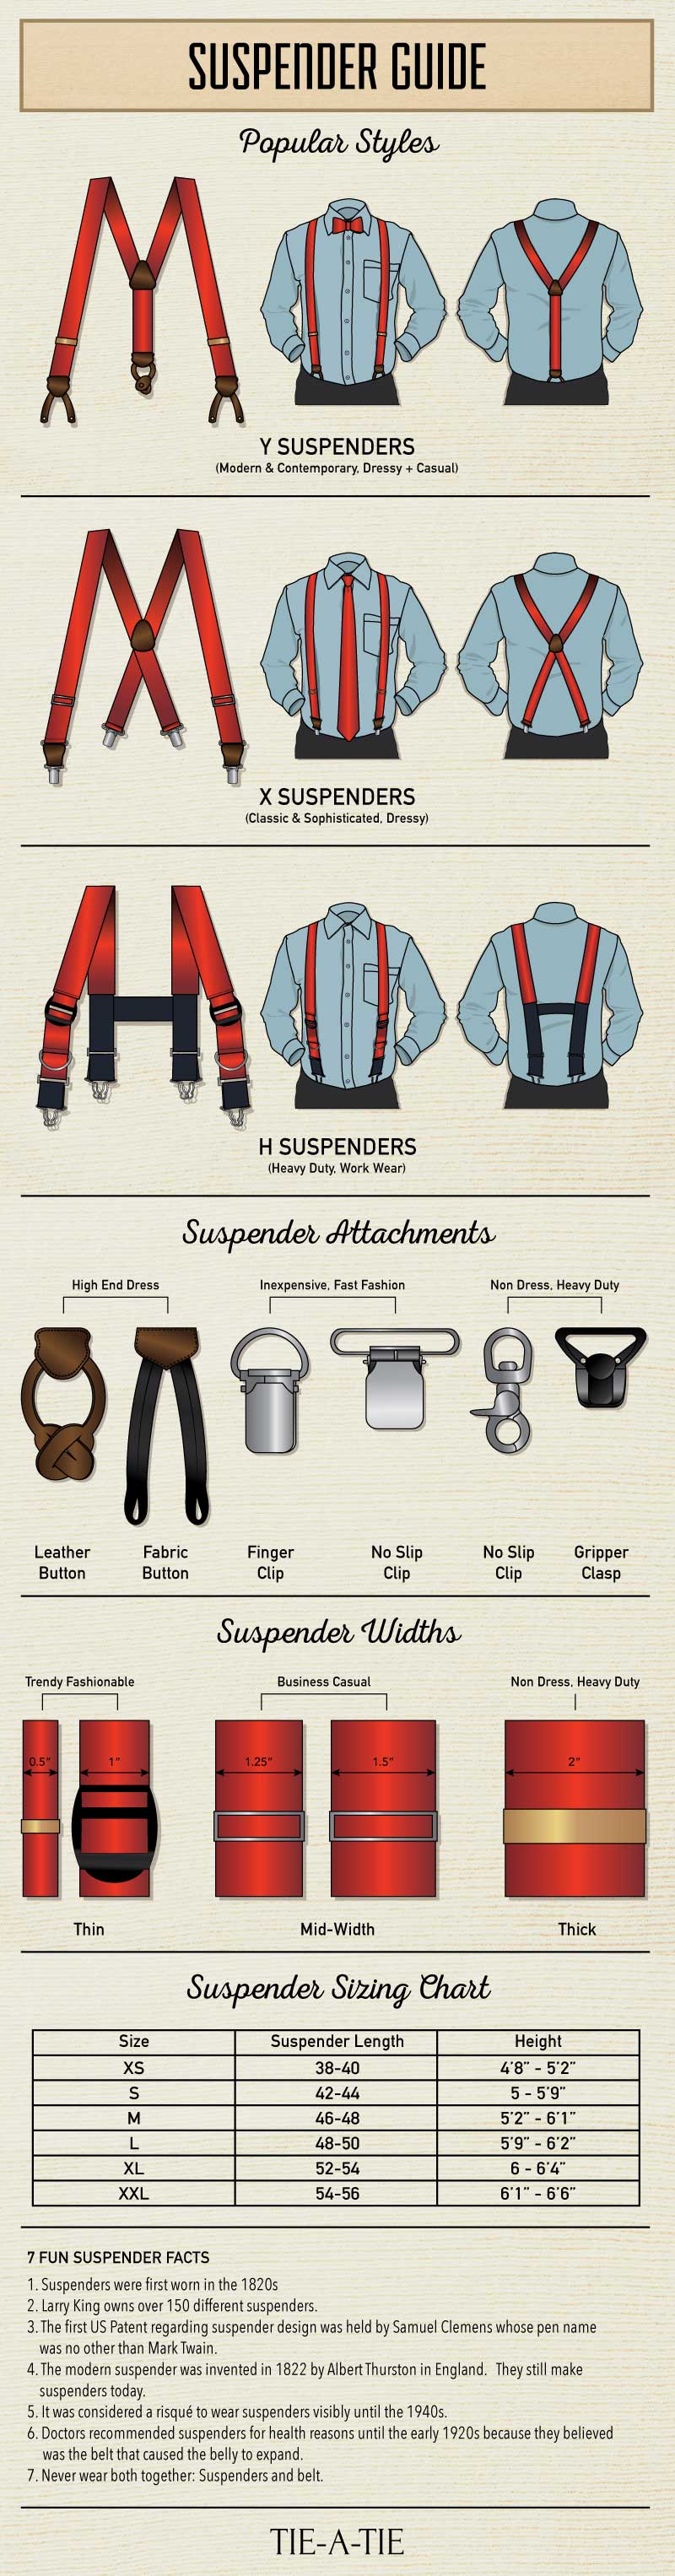 Suspender Guide How to Wear Suspenders